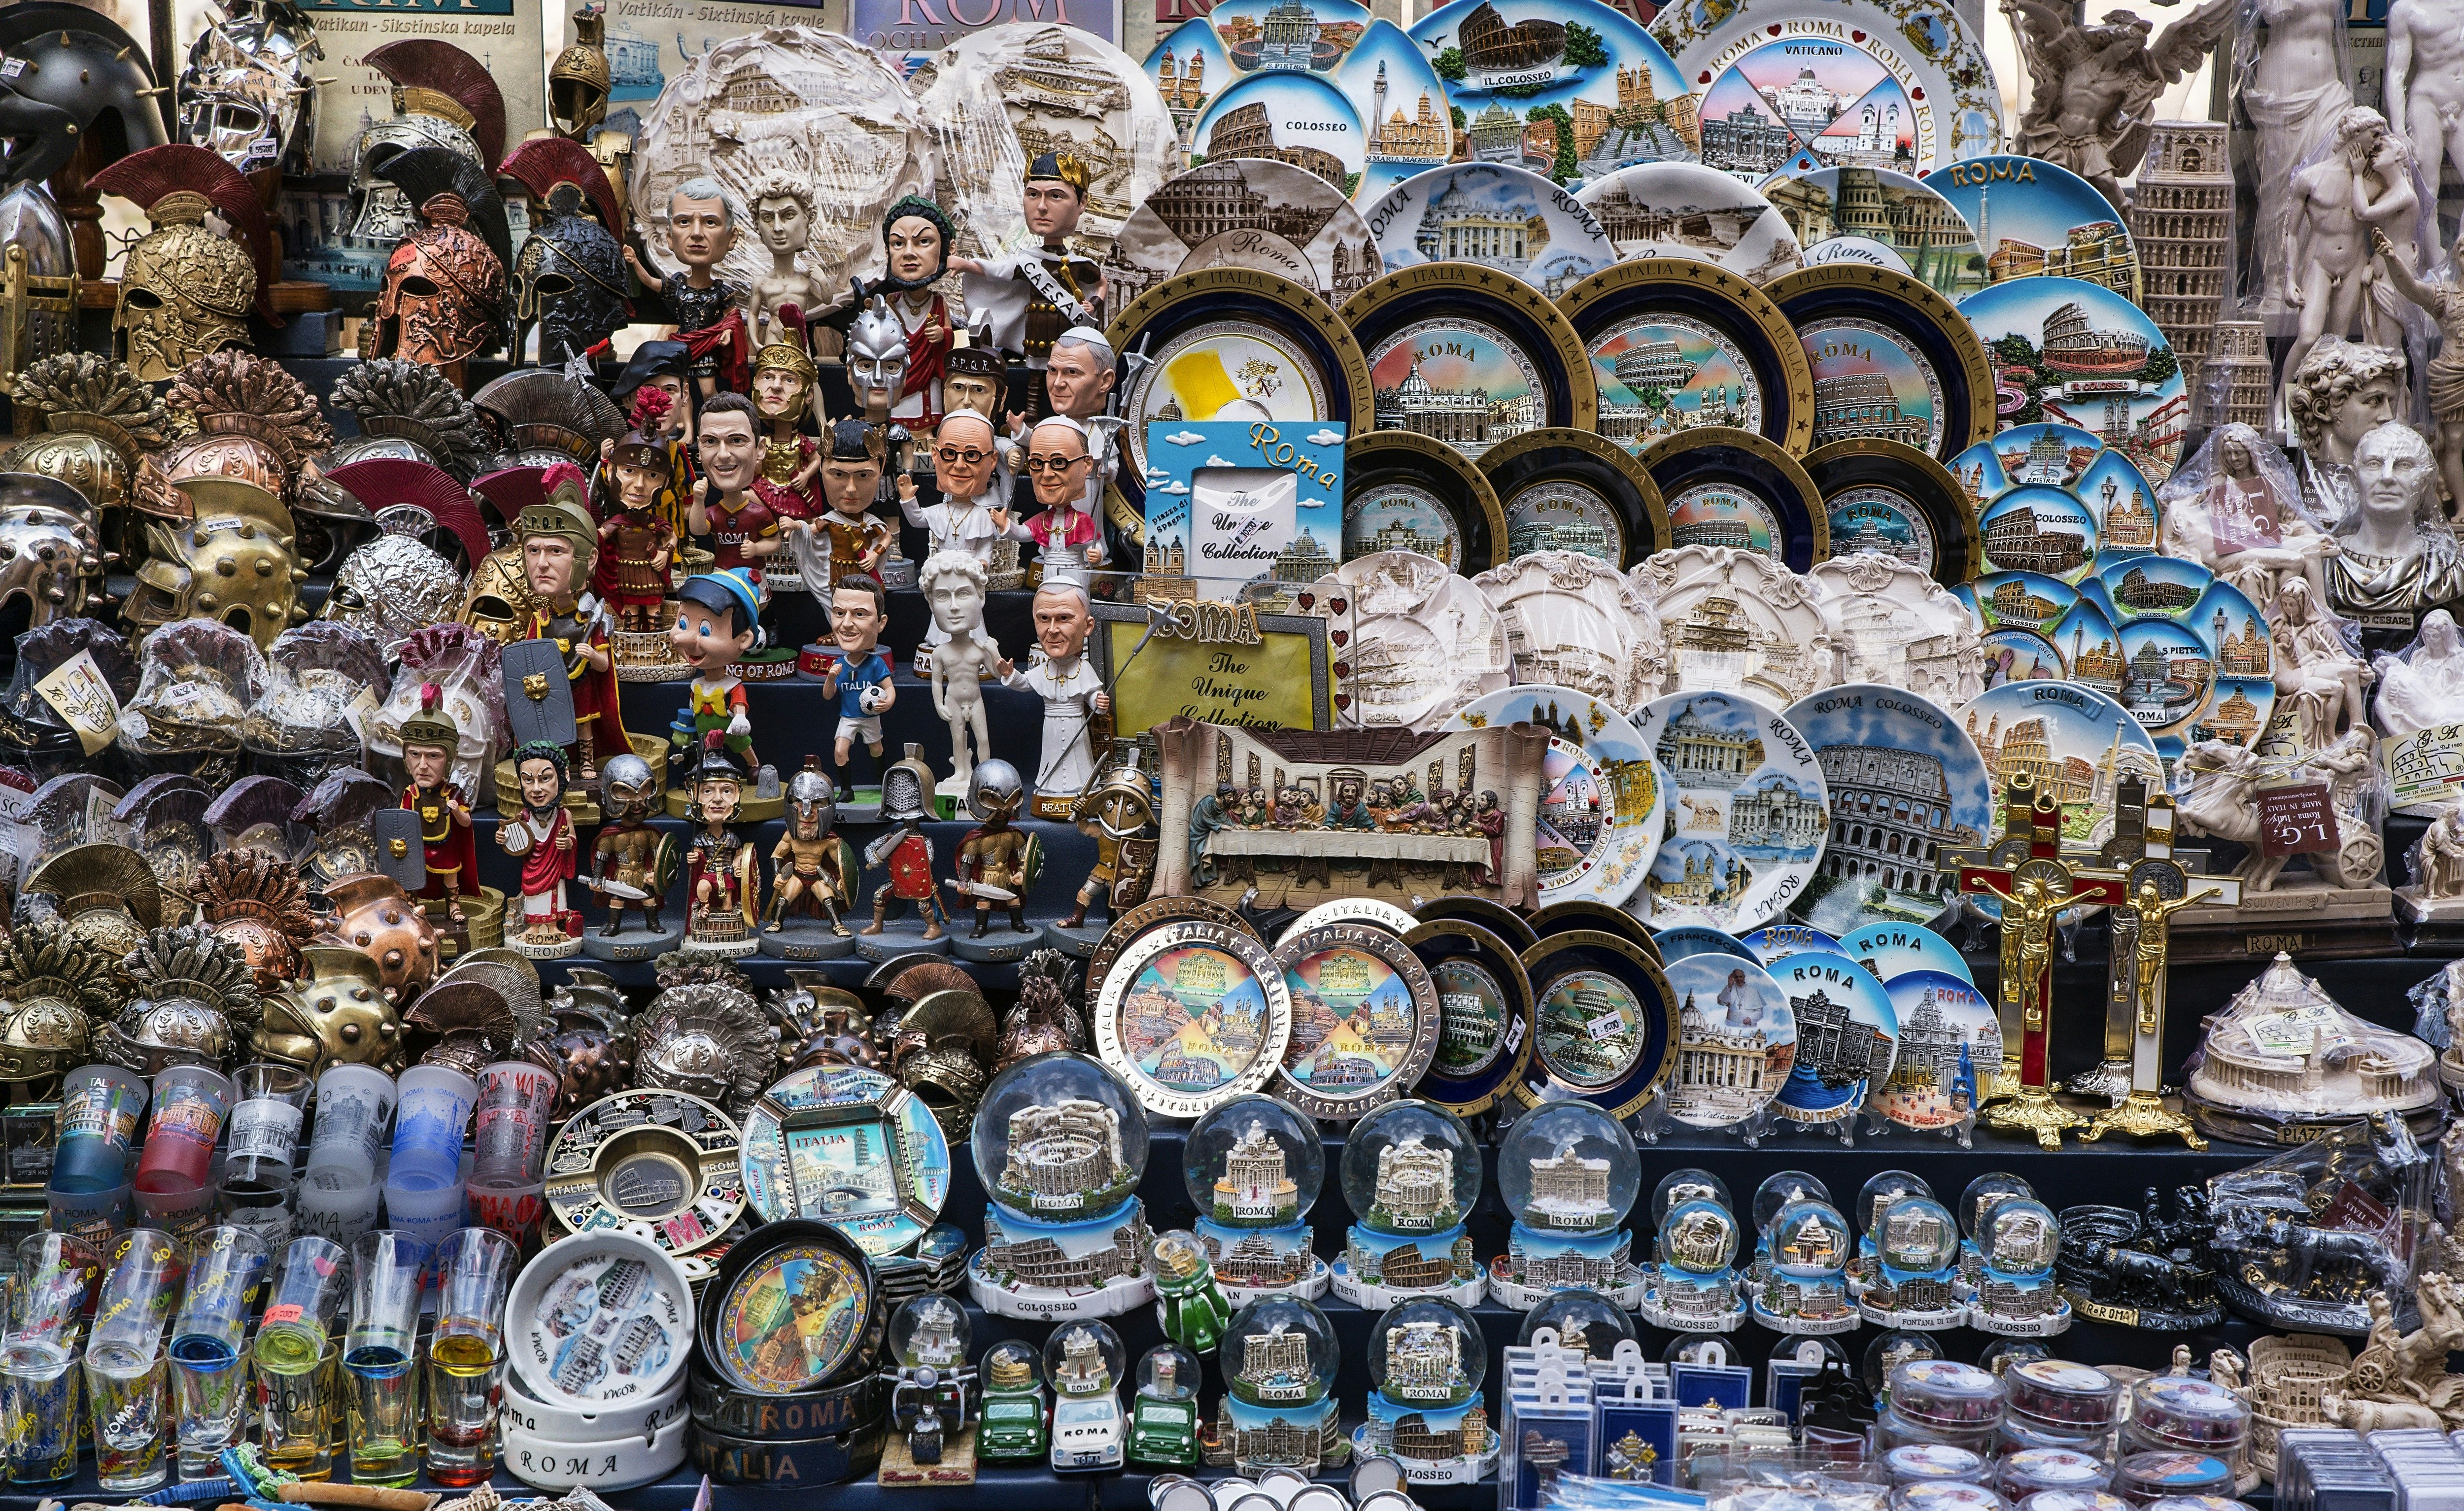 Street vendor display of souvenirs